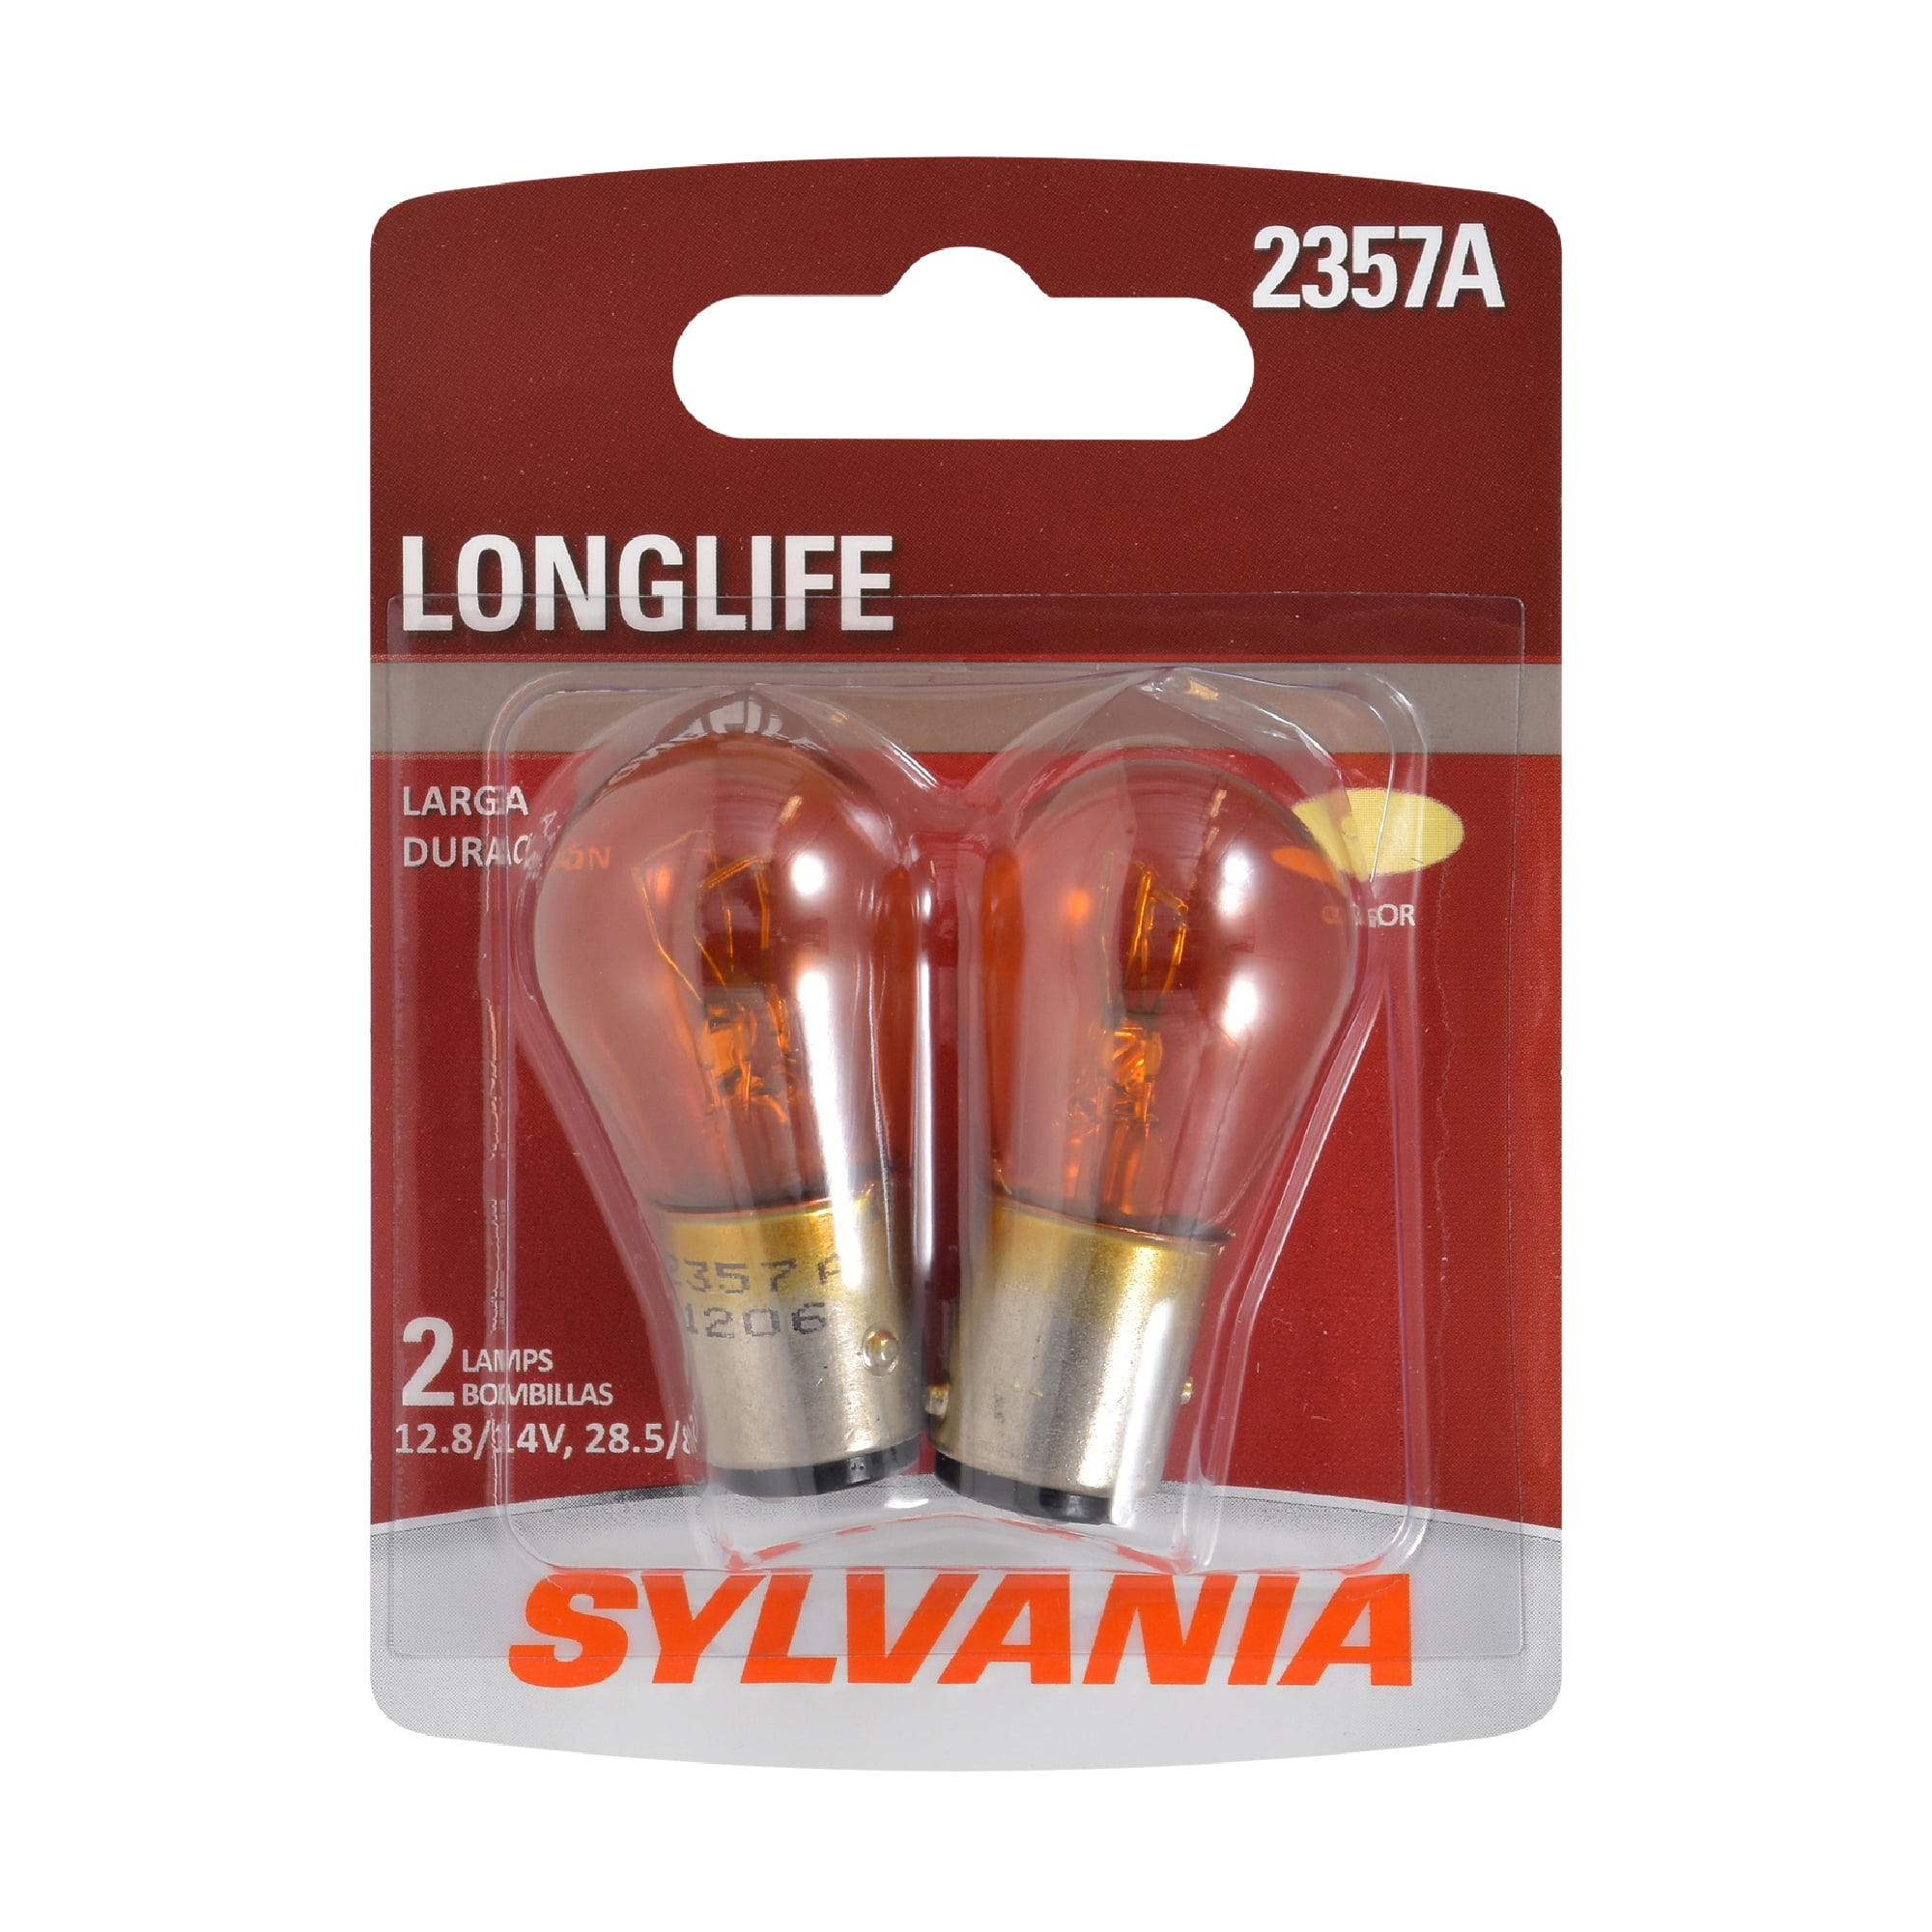 Sylvania 2357A Long Life Automotive Mini Bulb, Pack of 2.